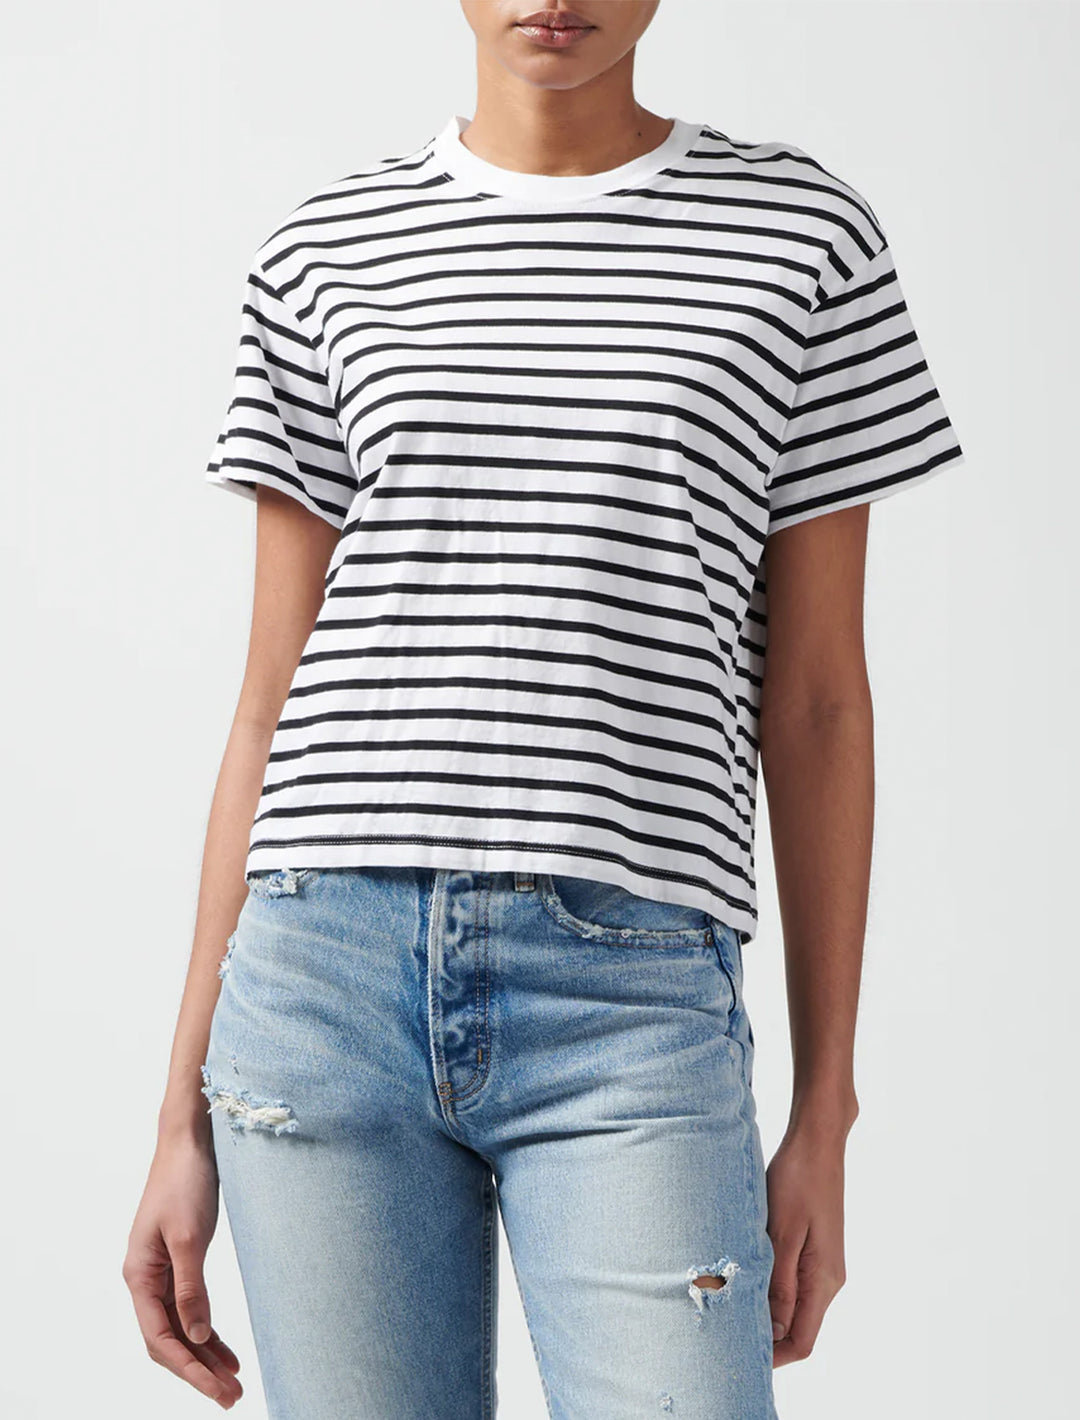 Model wearing ATM's classic jersey short sleeve stripe boy tee in black and white stripe.